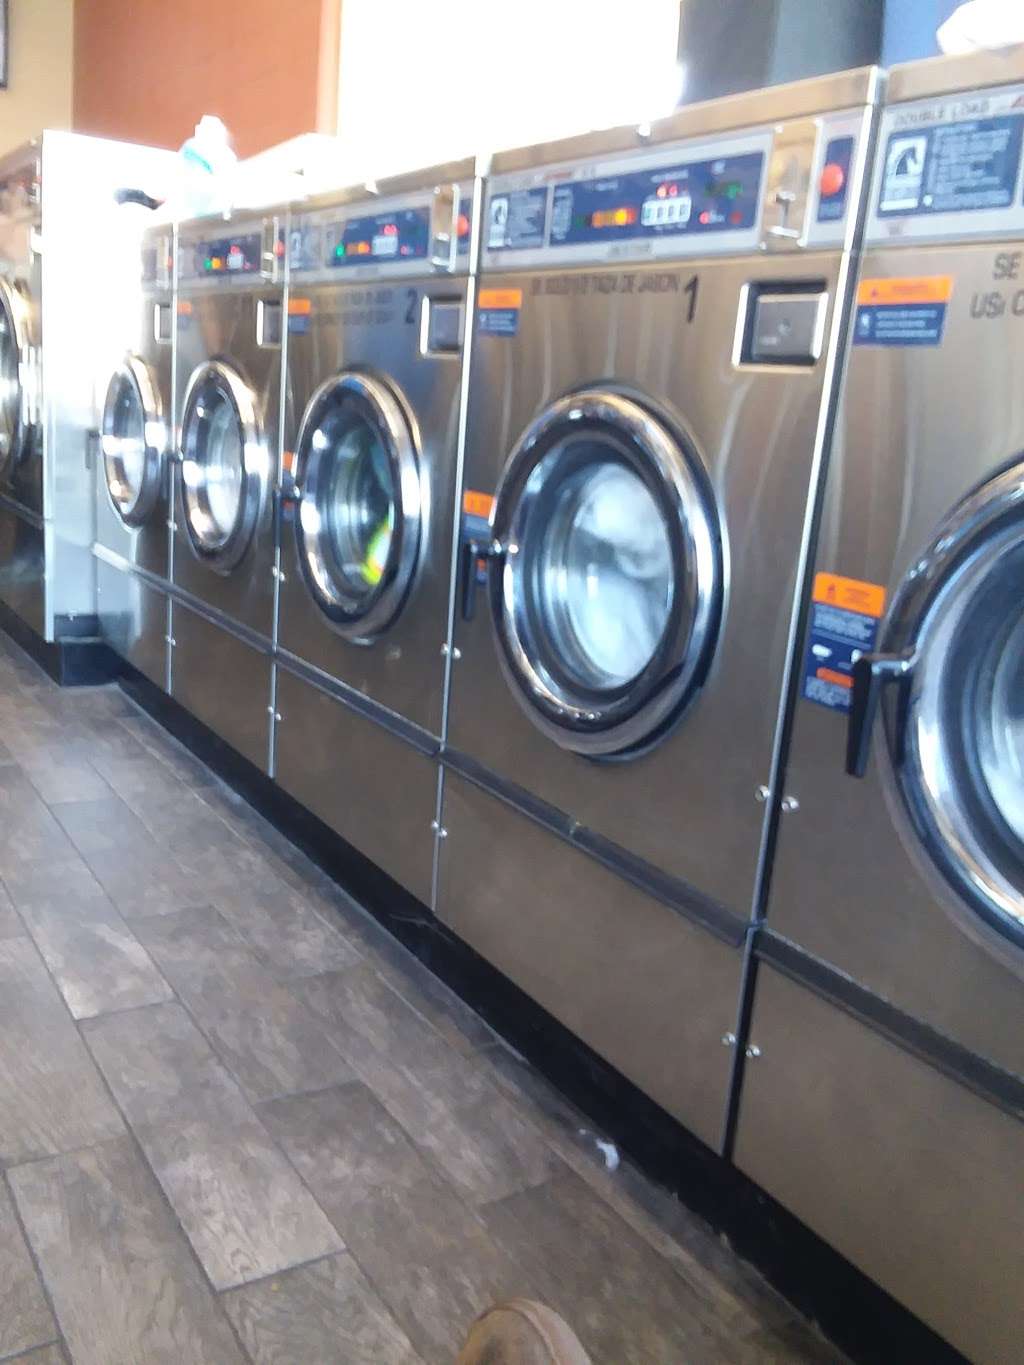 Paradise Laundromat | 982 Lincoln Ave, Napa, CA 94558, USA | Phone: (707) 266-1434